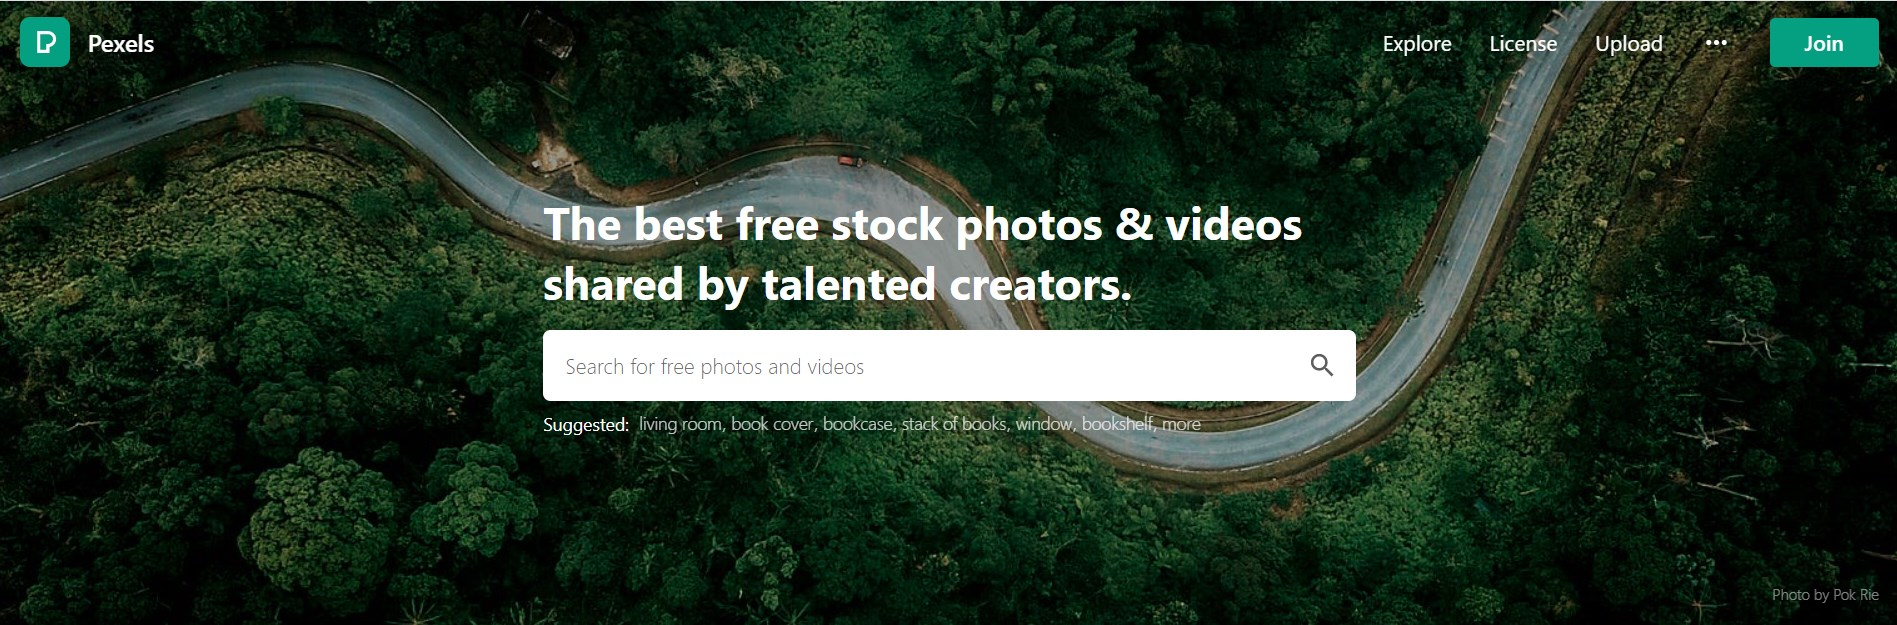 Pexels free stock images website - bigwigblooger